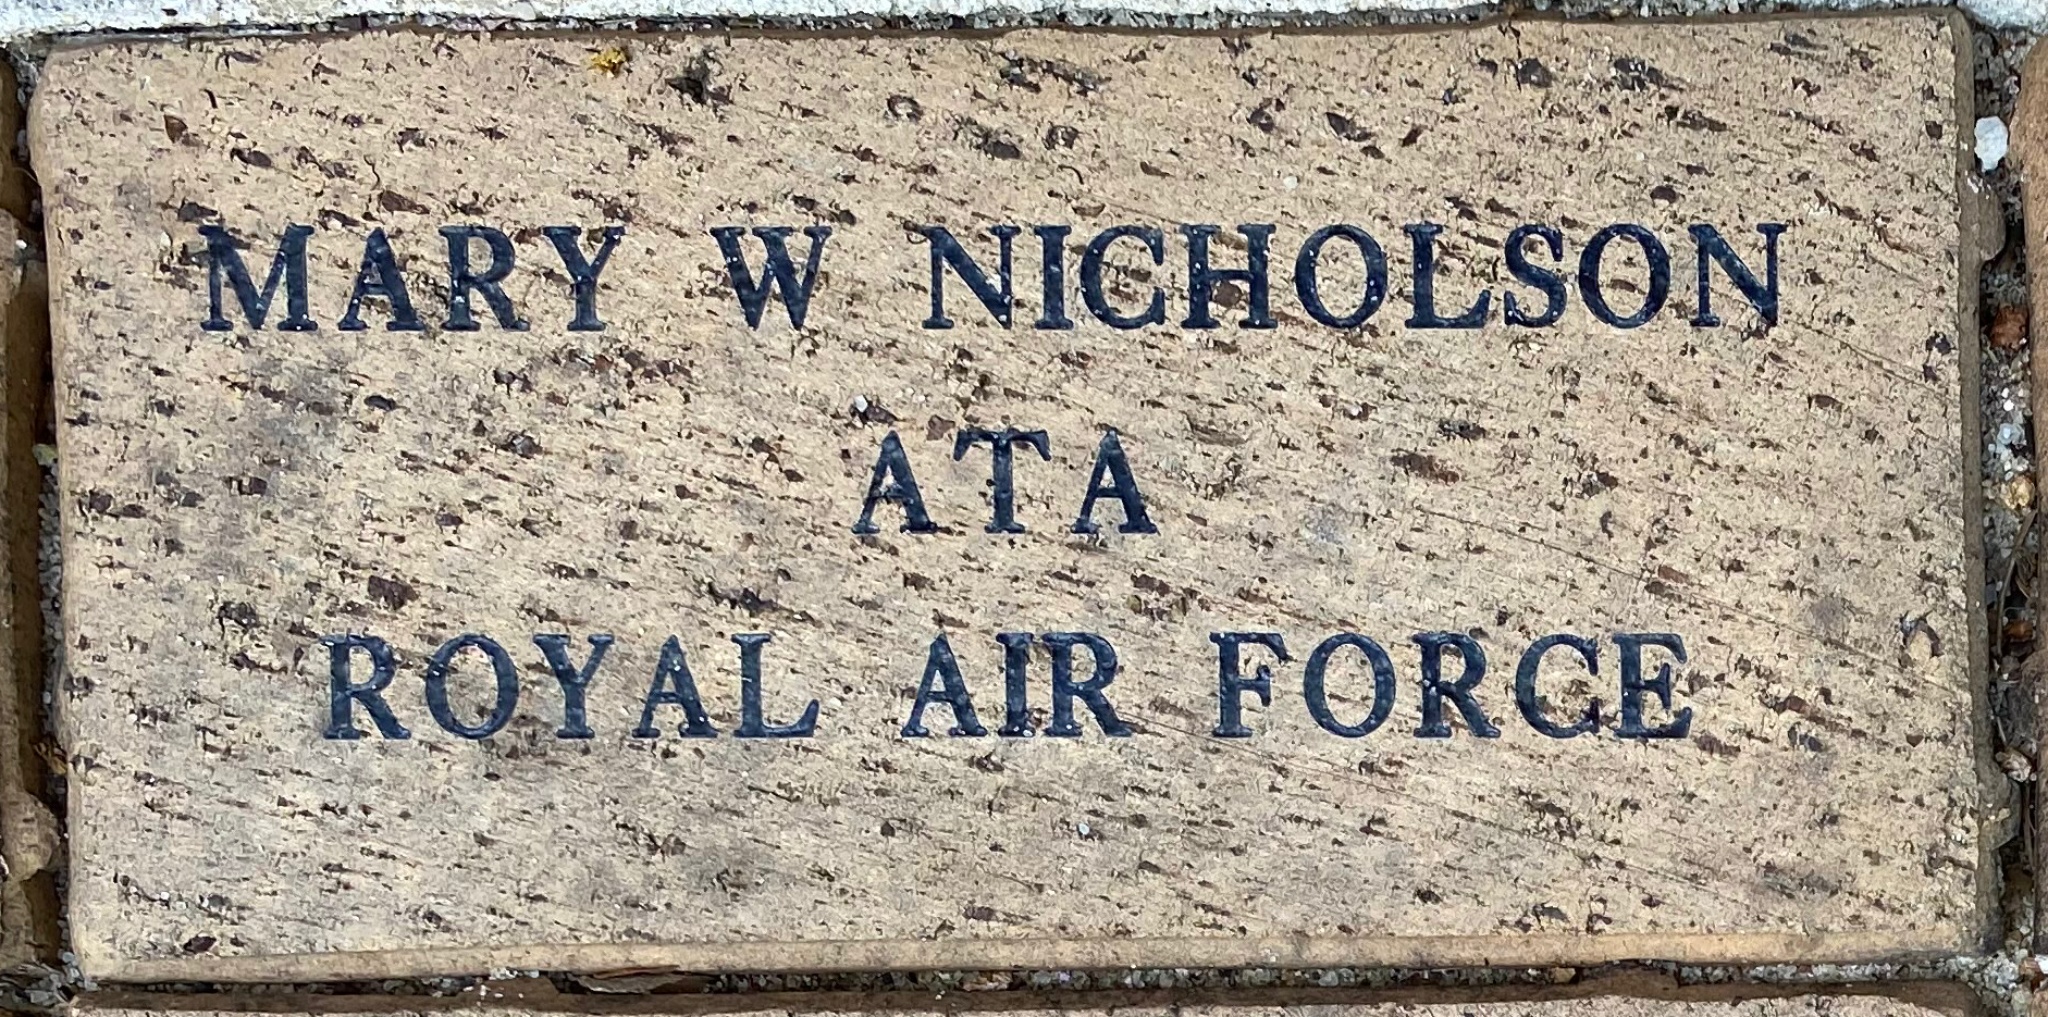 MARY W NICHOLSON ATA ROYAL AIR FORCE